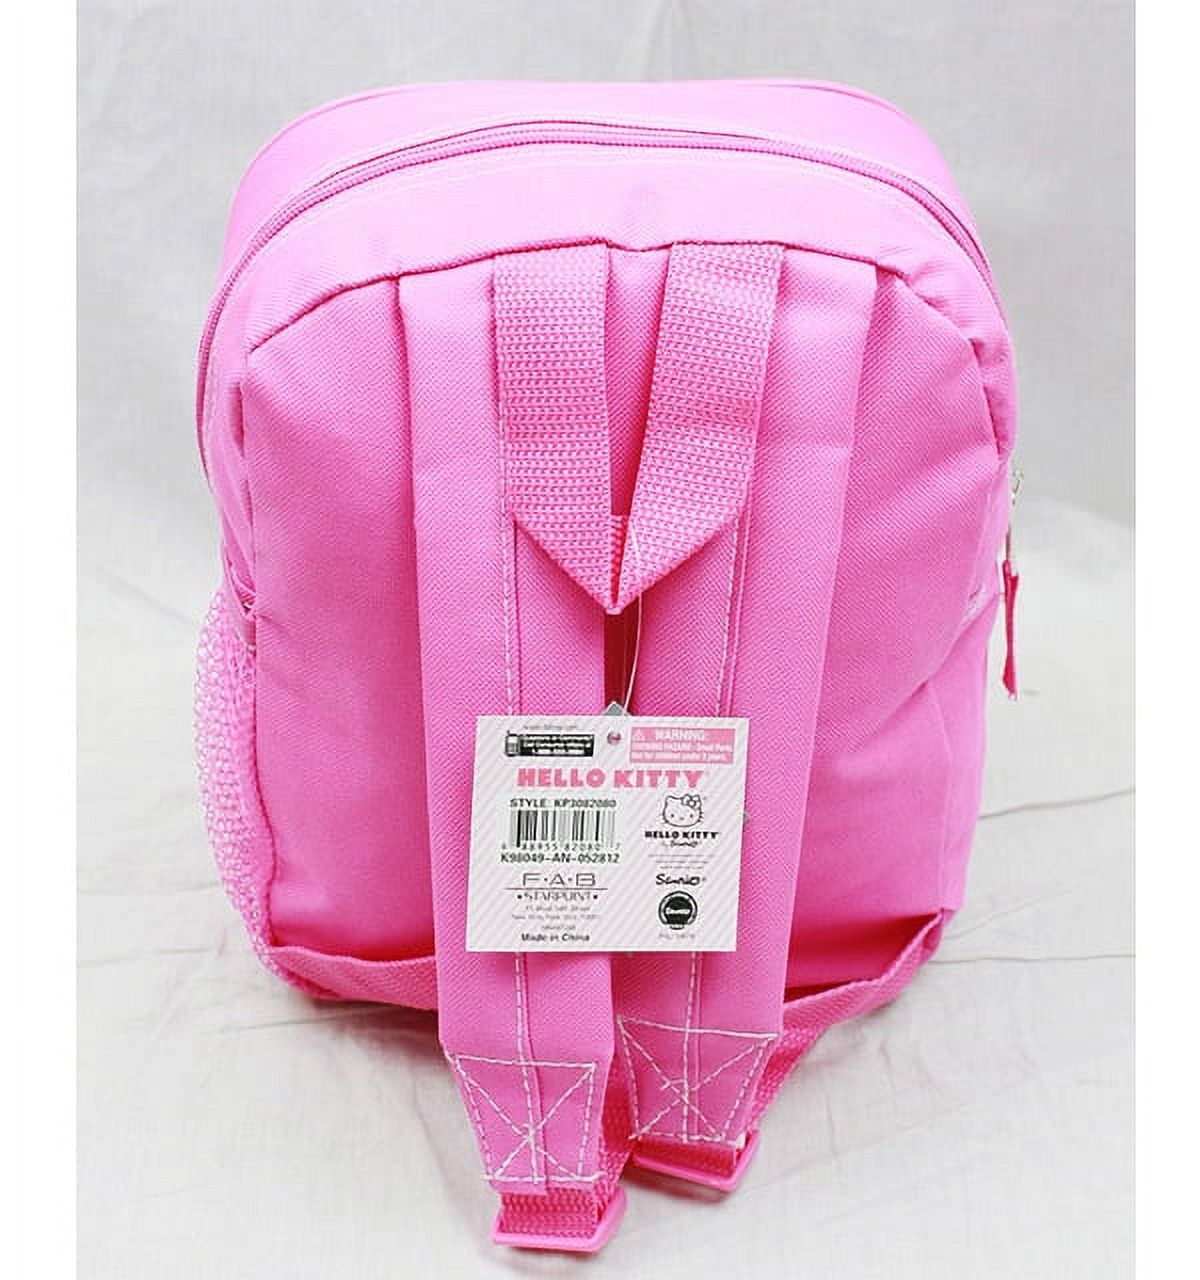 Mini Backpack - Hello Kitty - Pink Checker New School Bag Book Girls 82080 - image 3 of 3